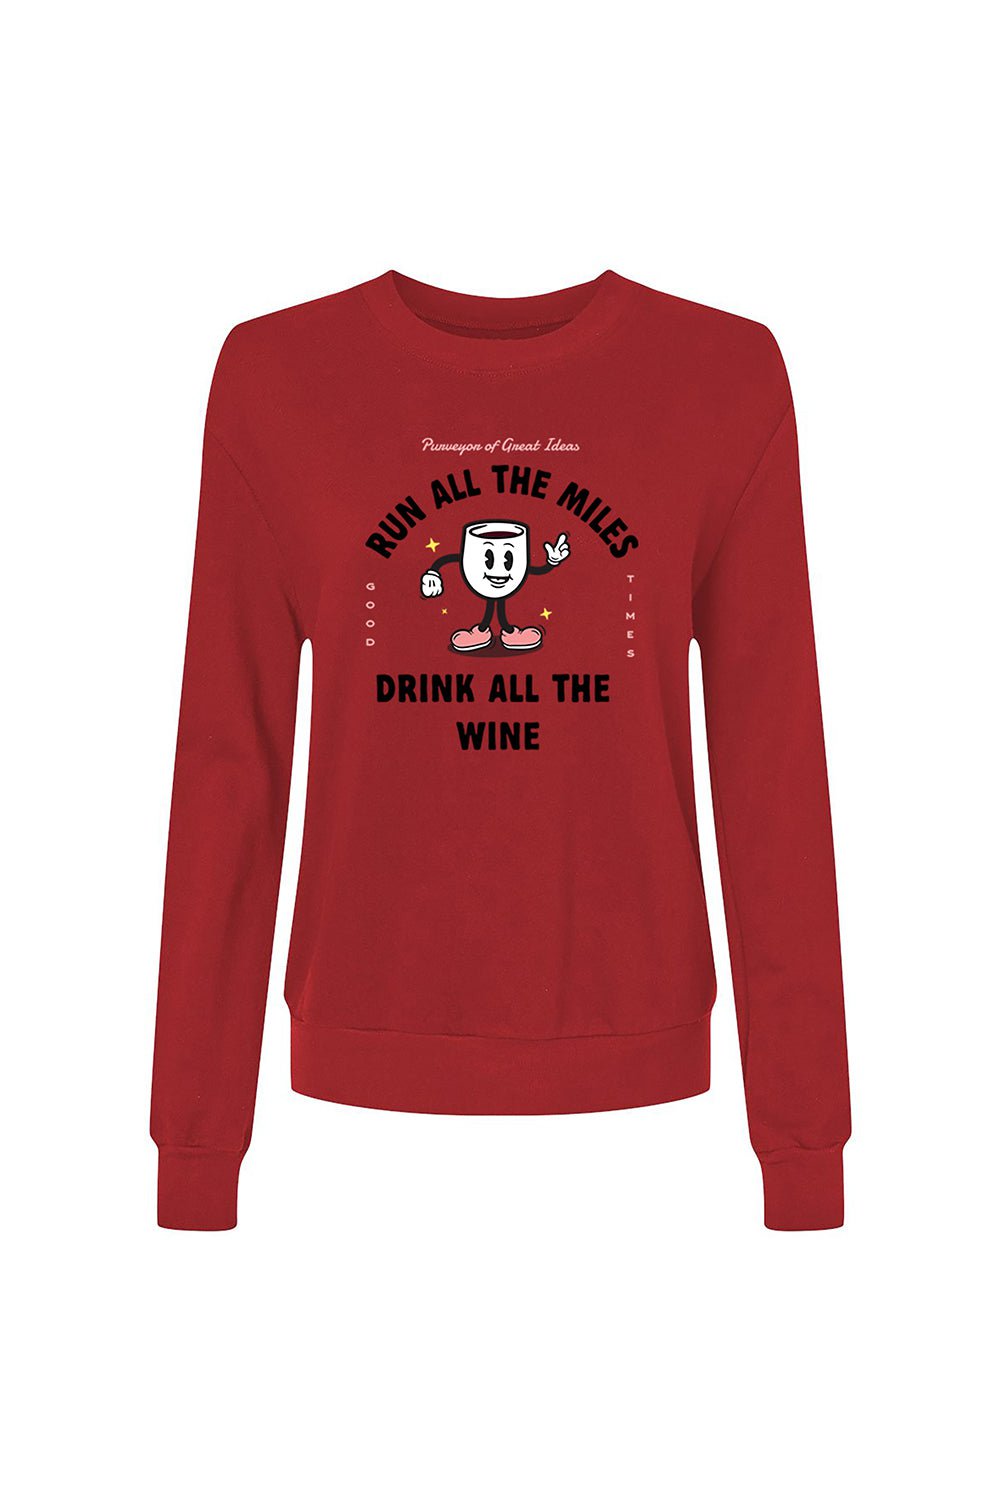 Sarah Marie Design Studio Sweatshirt Run All The Miles, Drink All The Wine Women's Sweatshirt